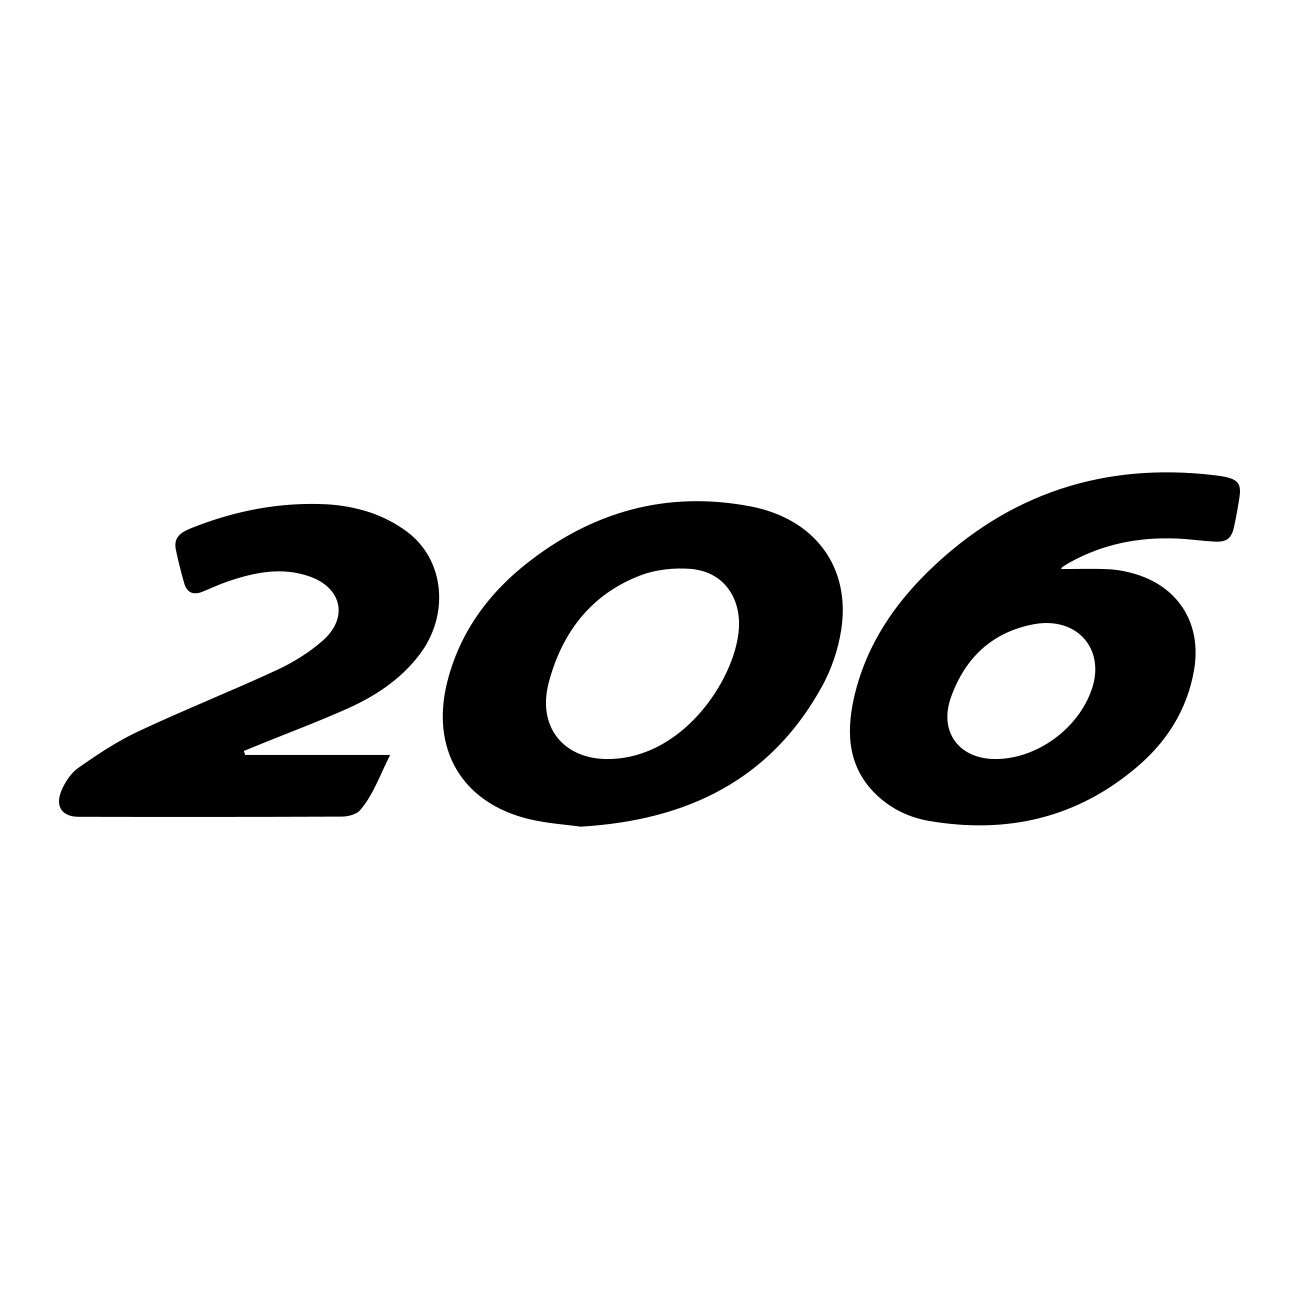 peugeot 206 logo